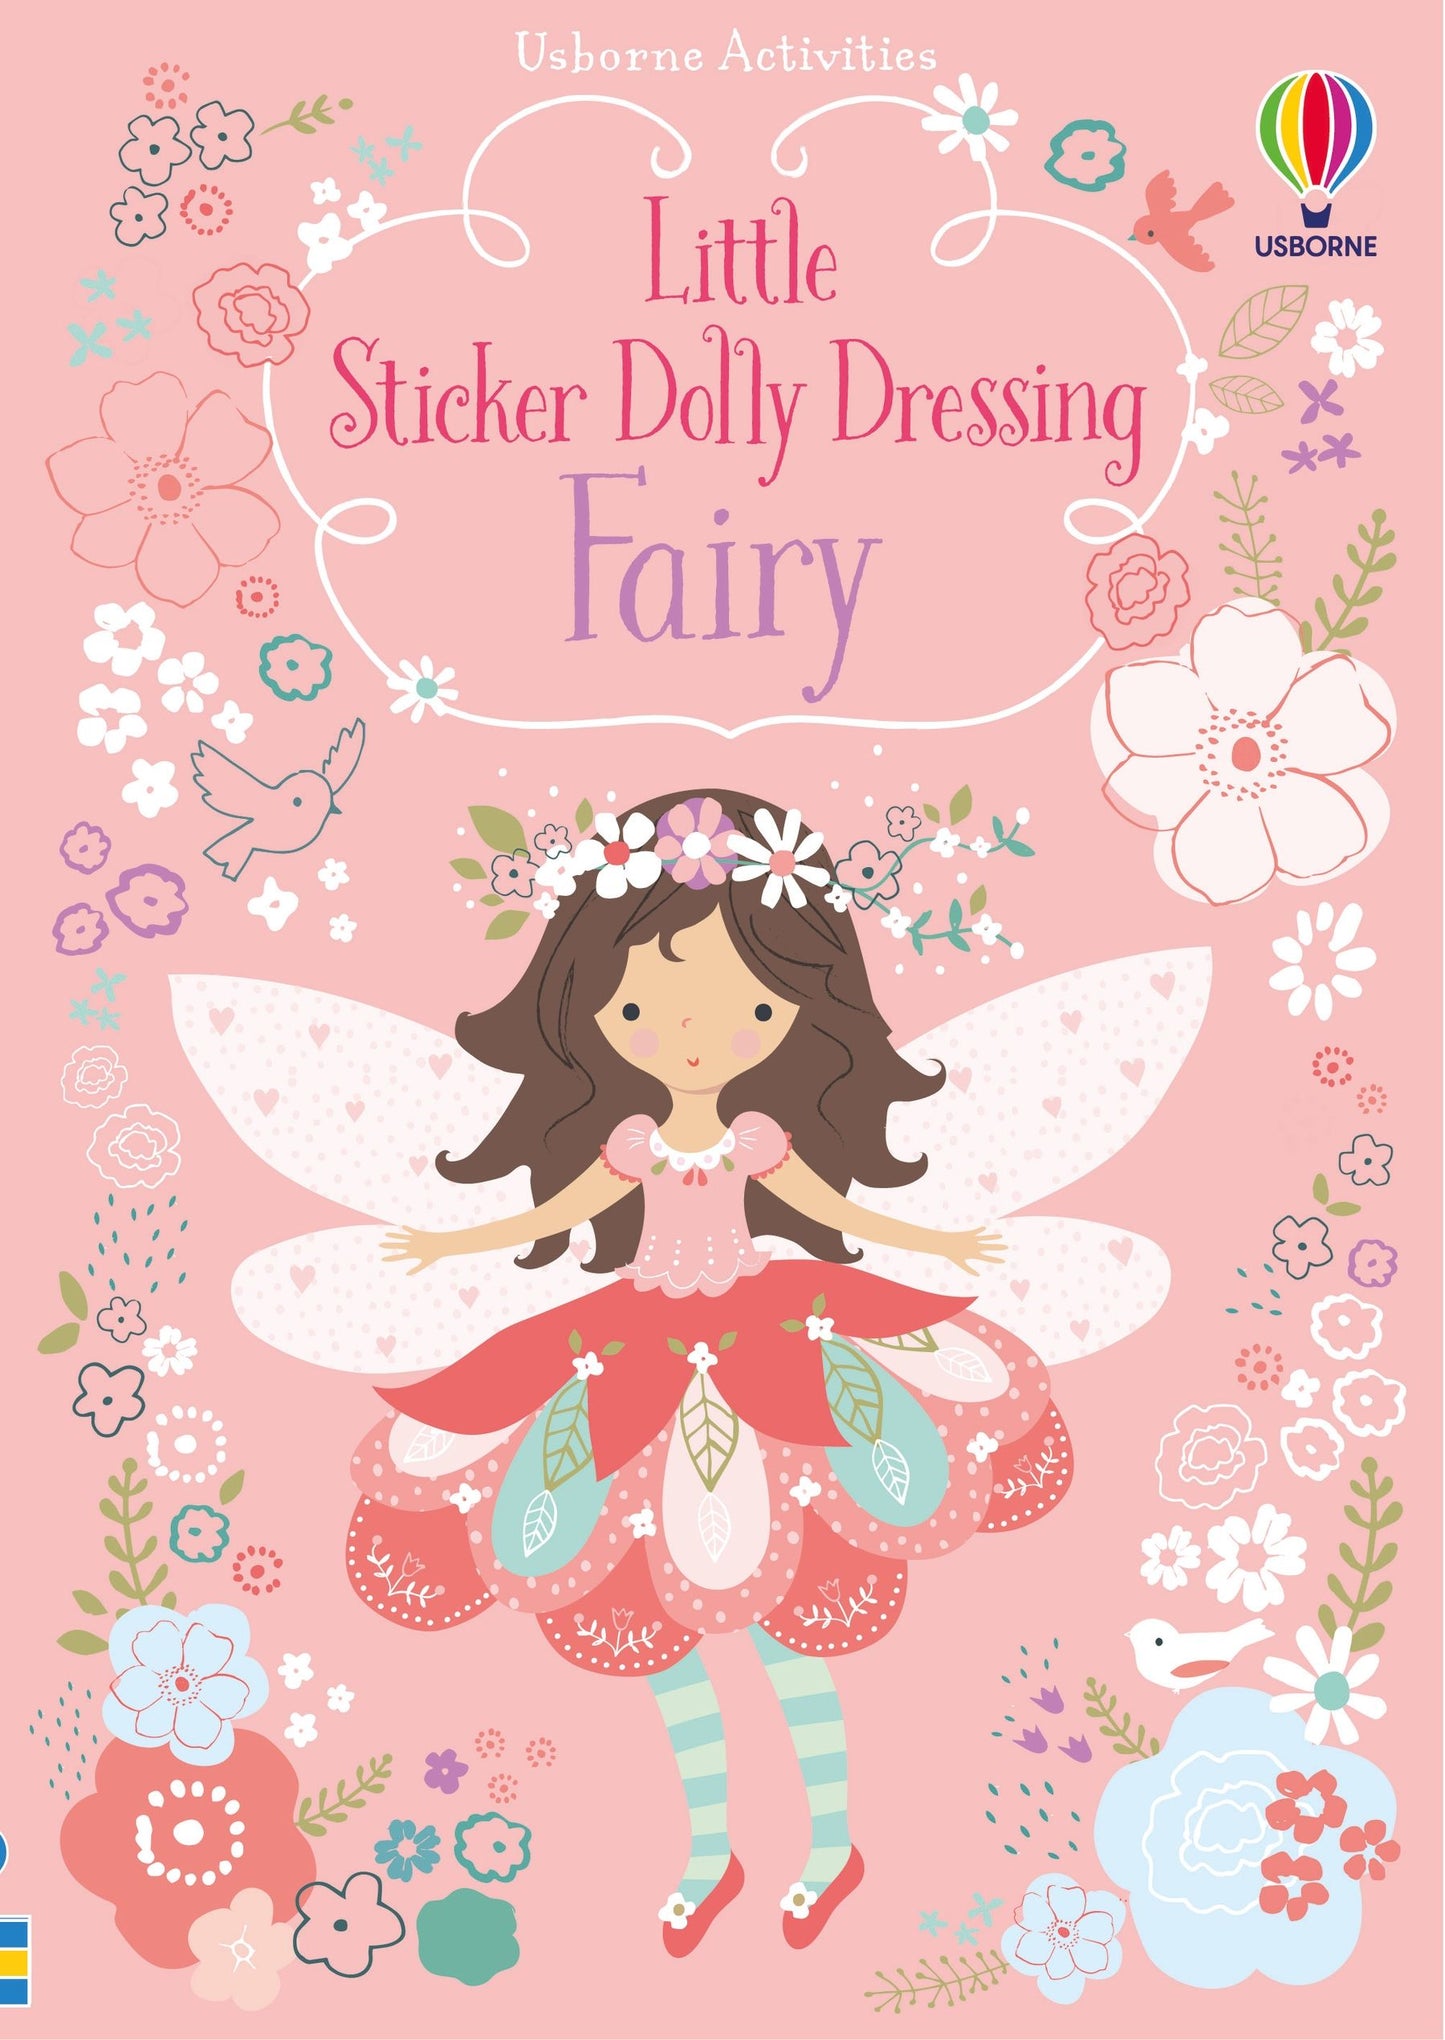 Usborne Books - Little Sticker Dolly Dressing Fairy